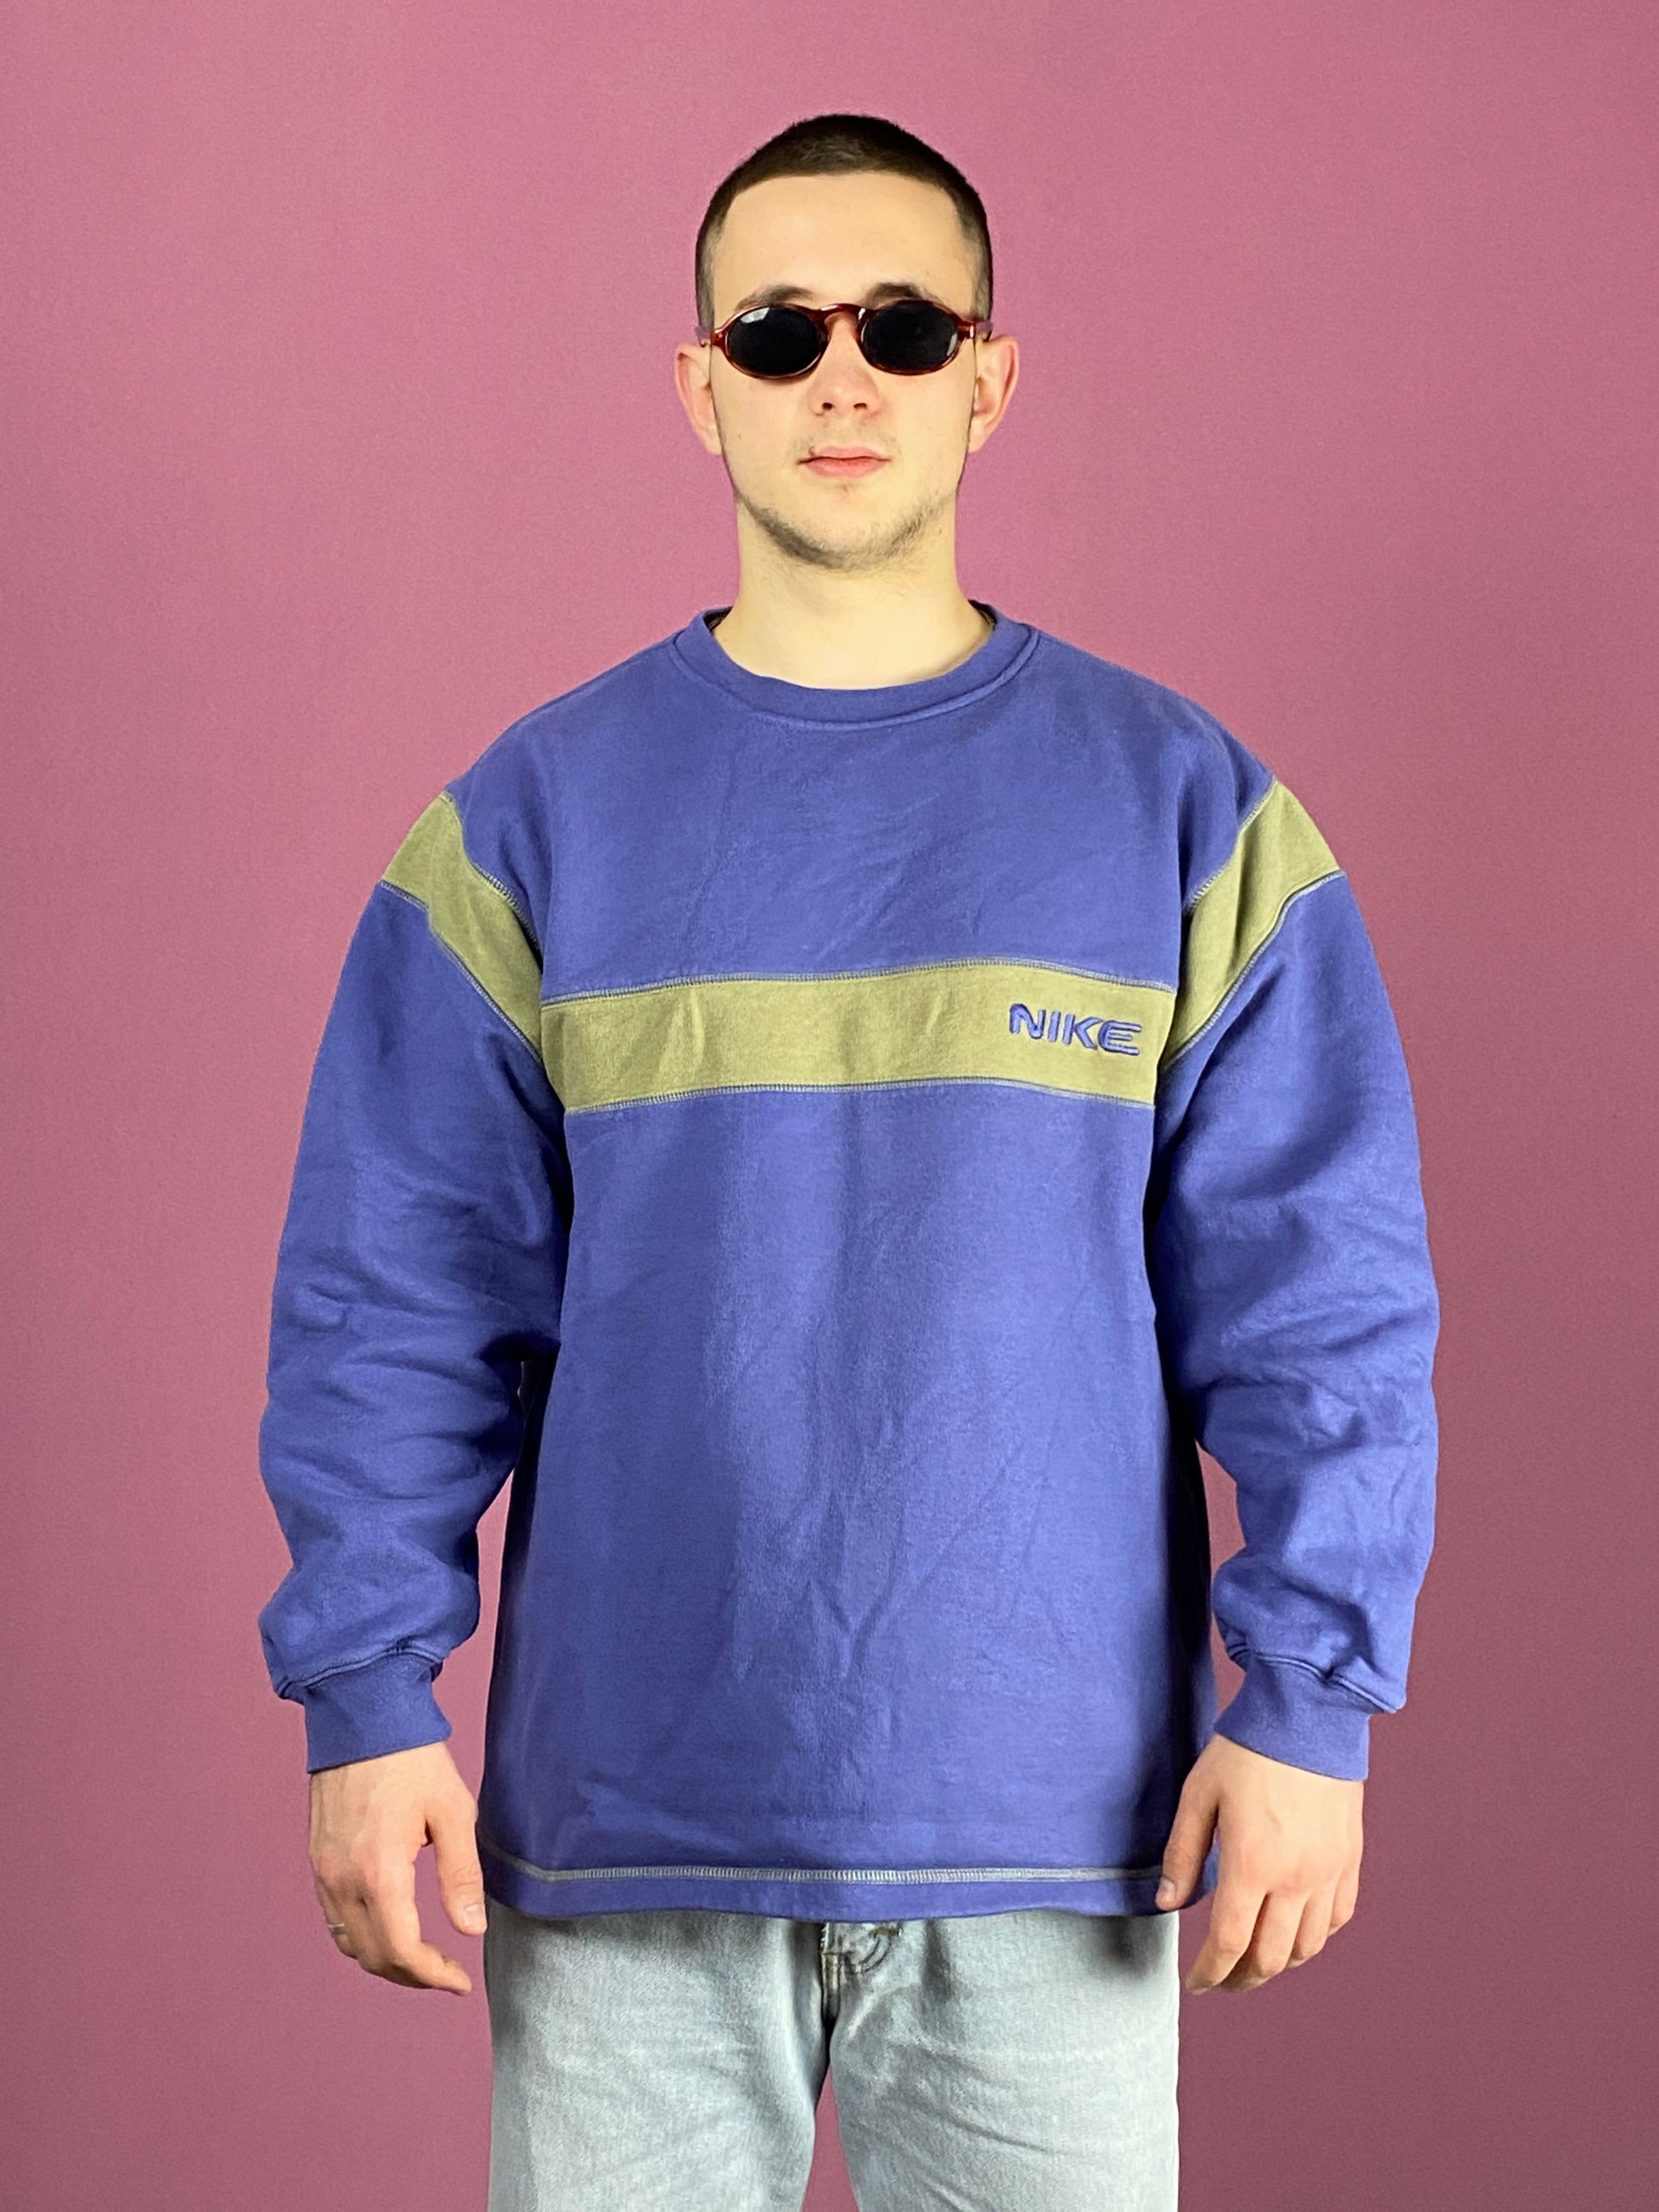 Nike Vintage Men's Sweatshirt - Large Blue Cotton